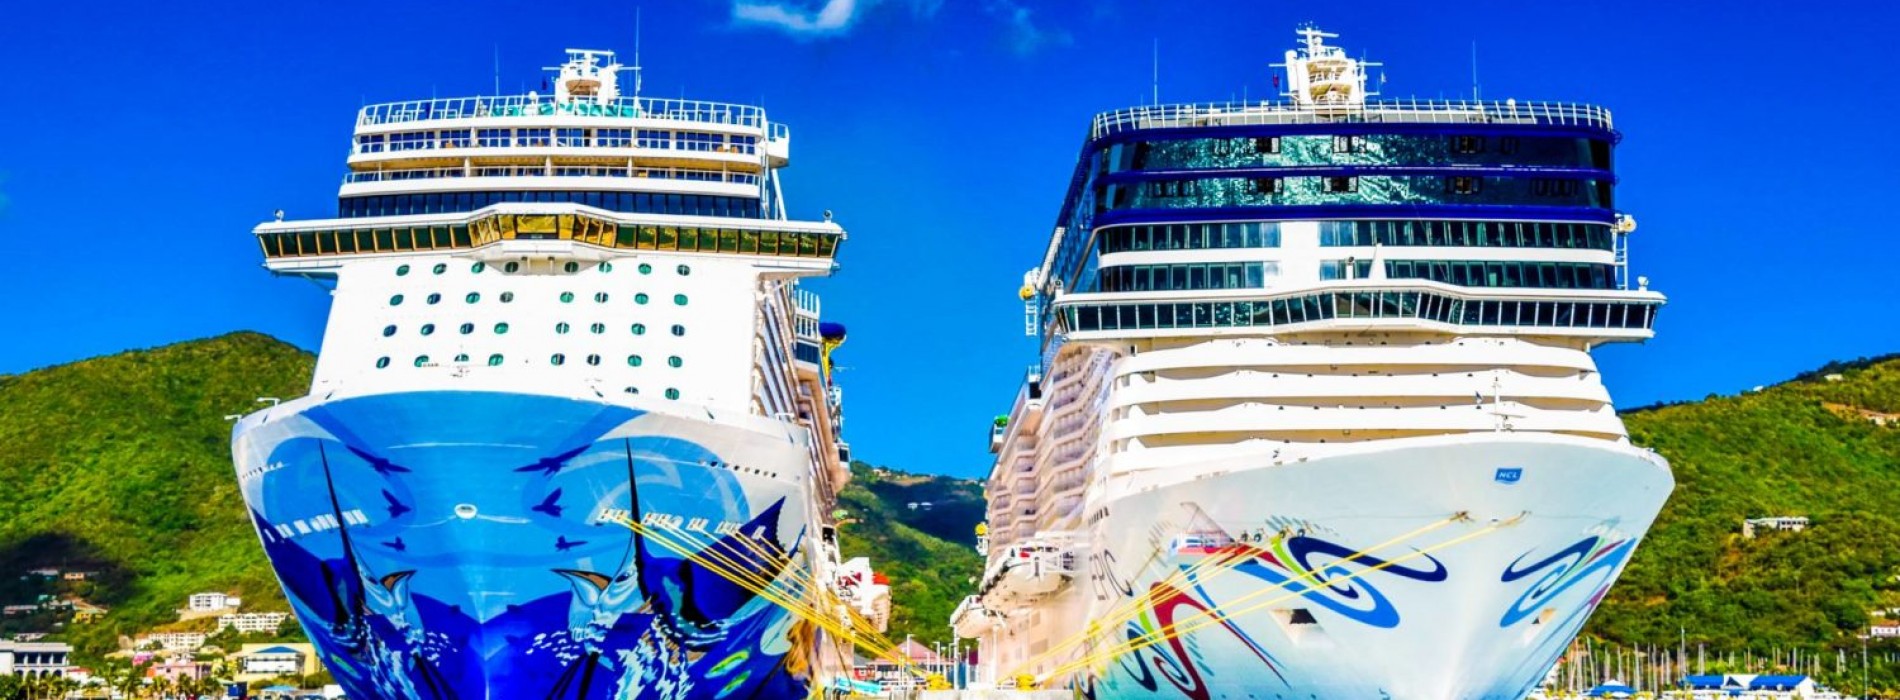 Norwegian Cruise Line has released its 2018-2019 Europe Cruising Guide